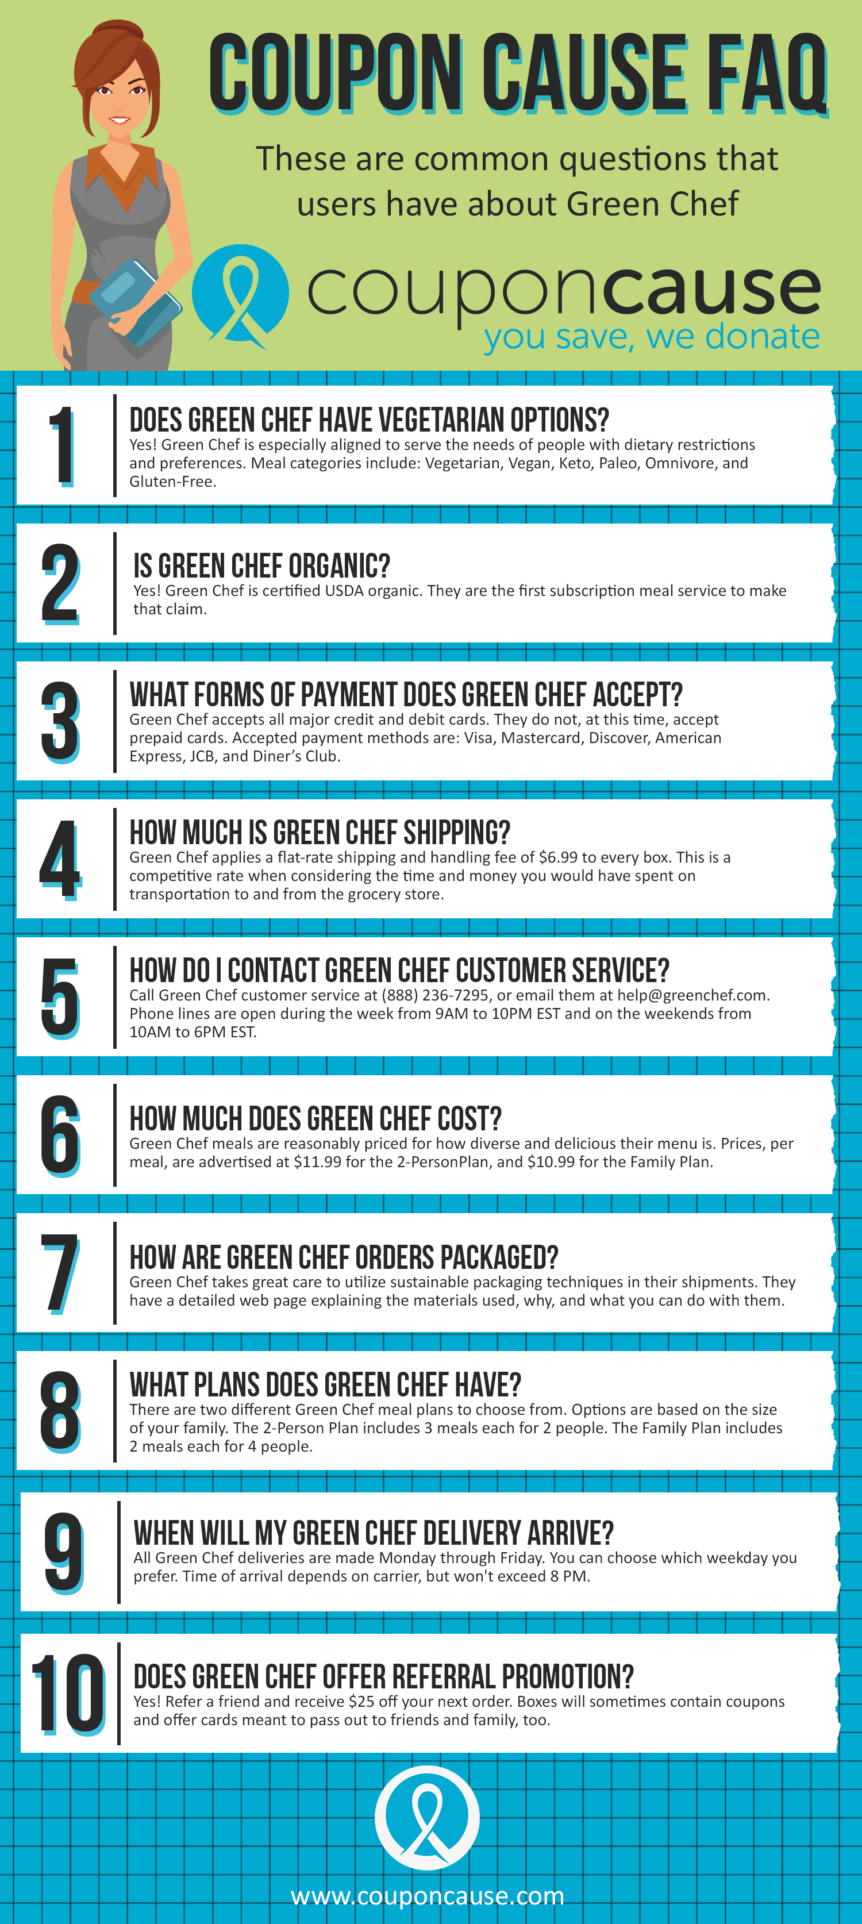 Green Chef Coupon Cause FAQ (C.C. FAQ)